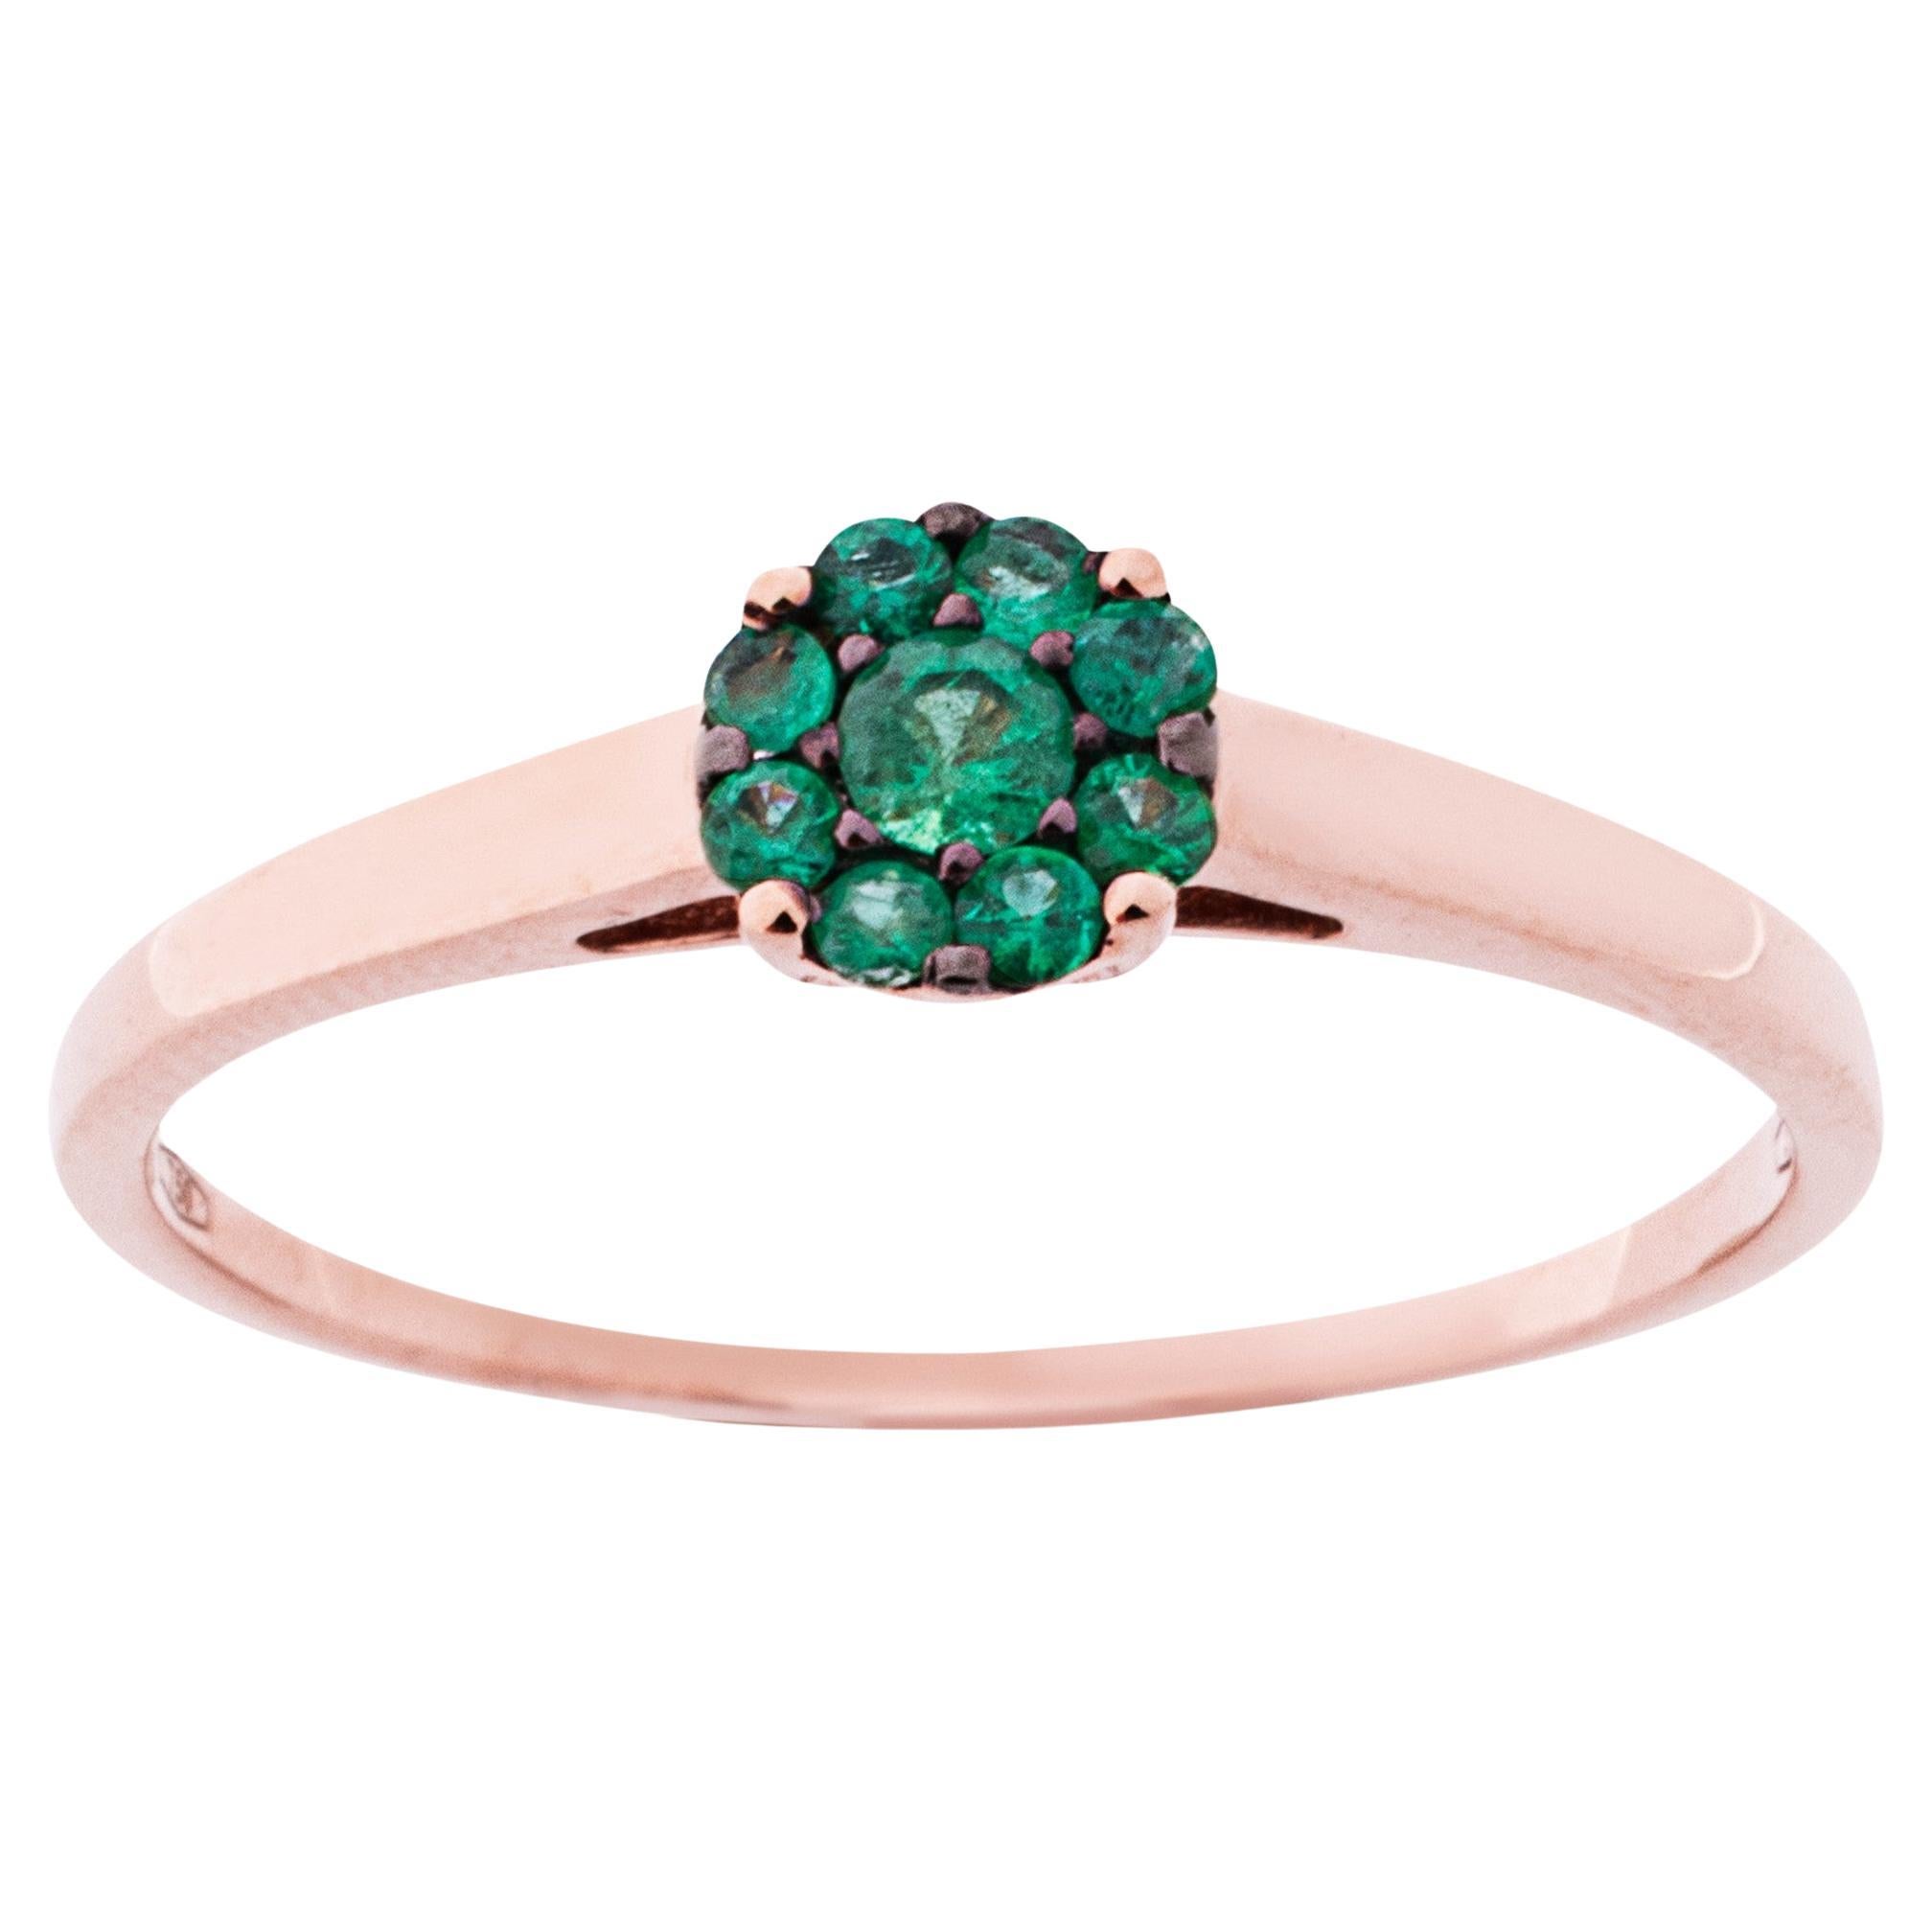 Alex Jona 18 Karat Rose Gold  Emerald Ring